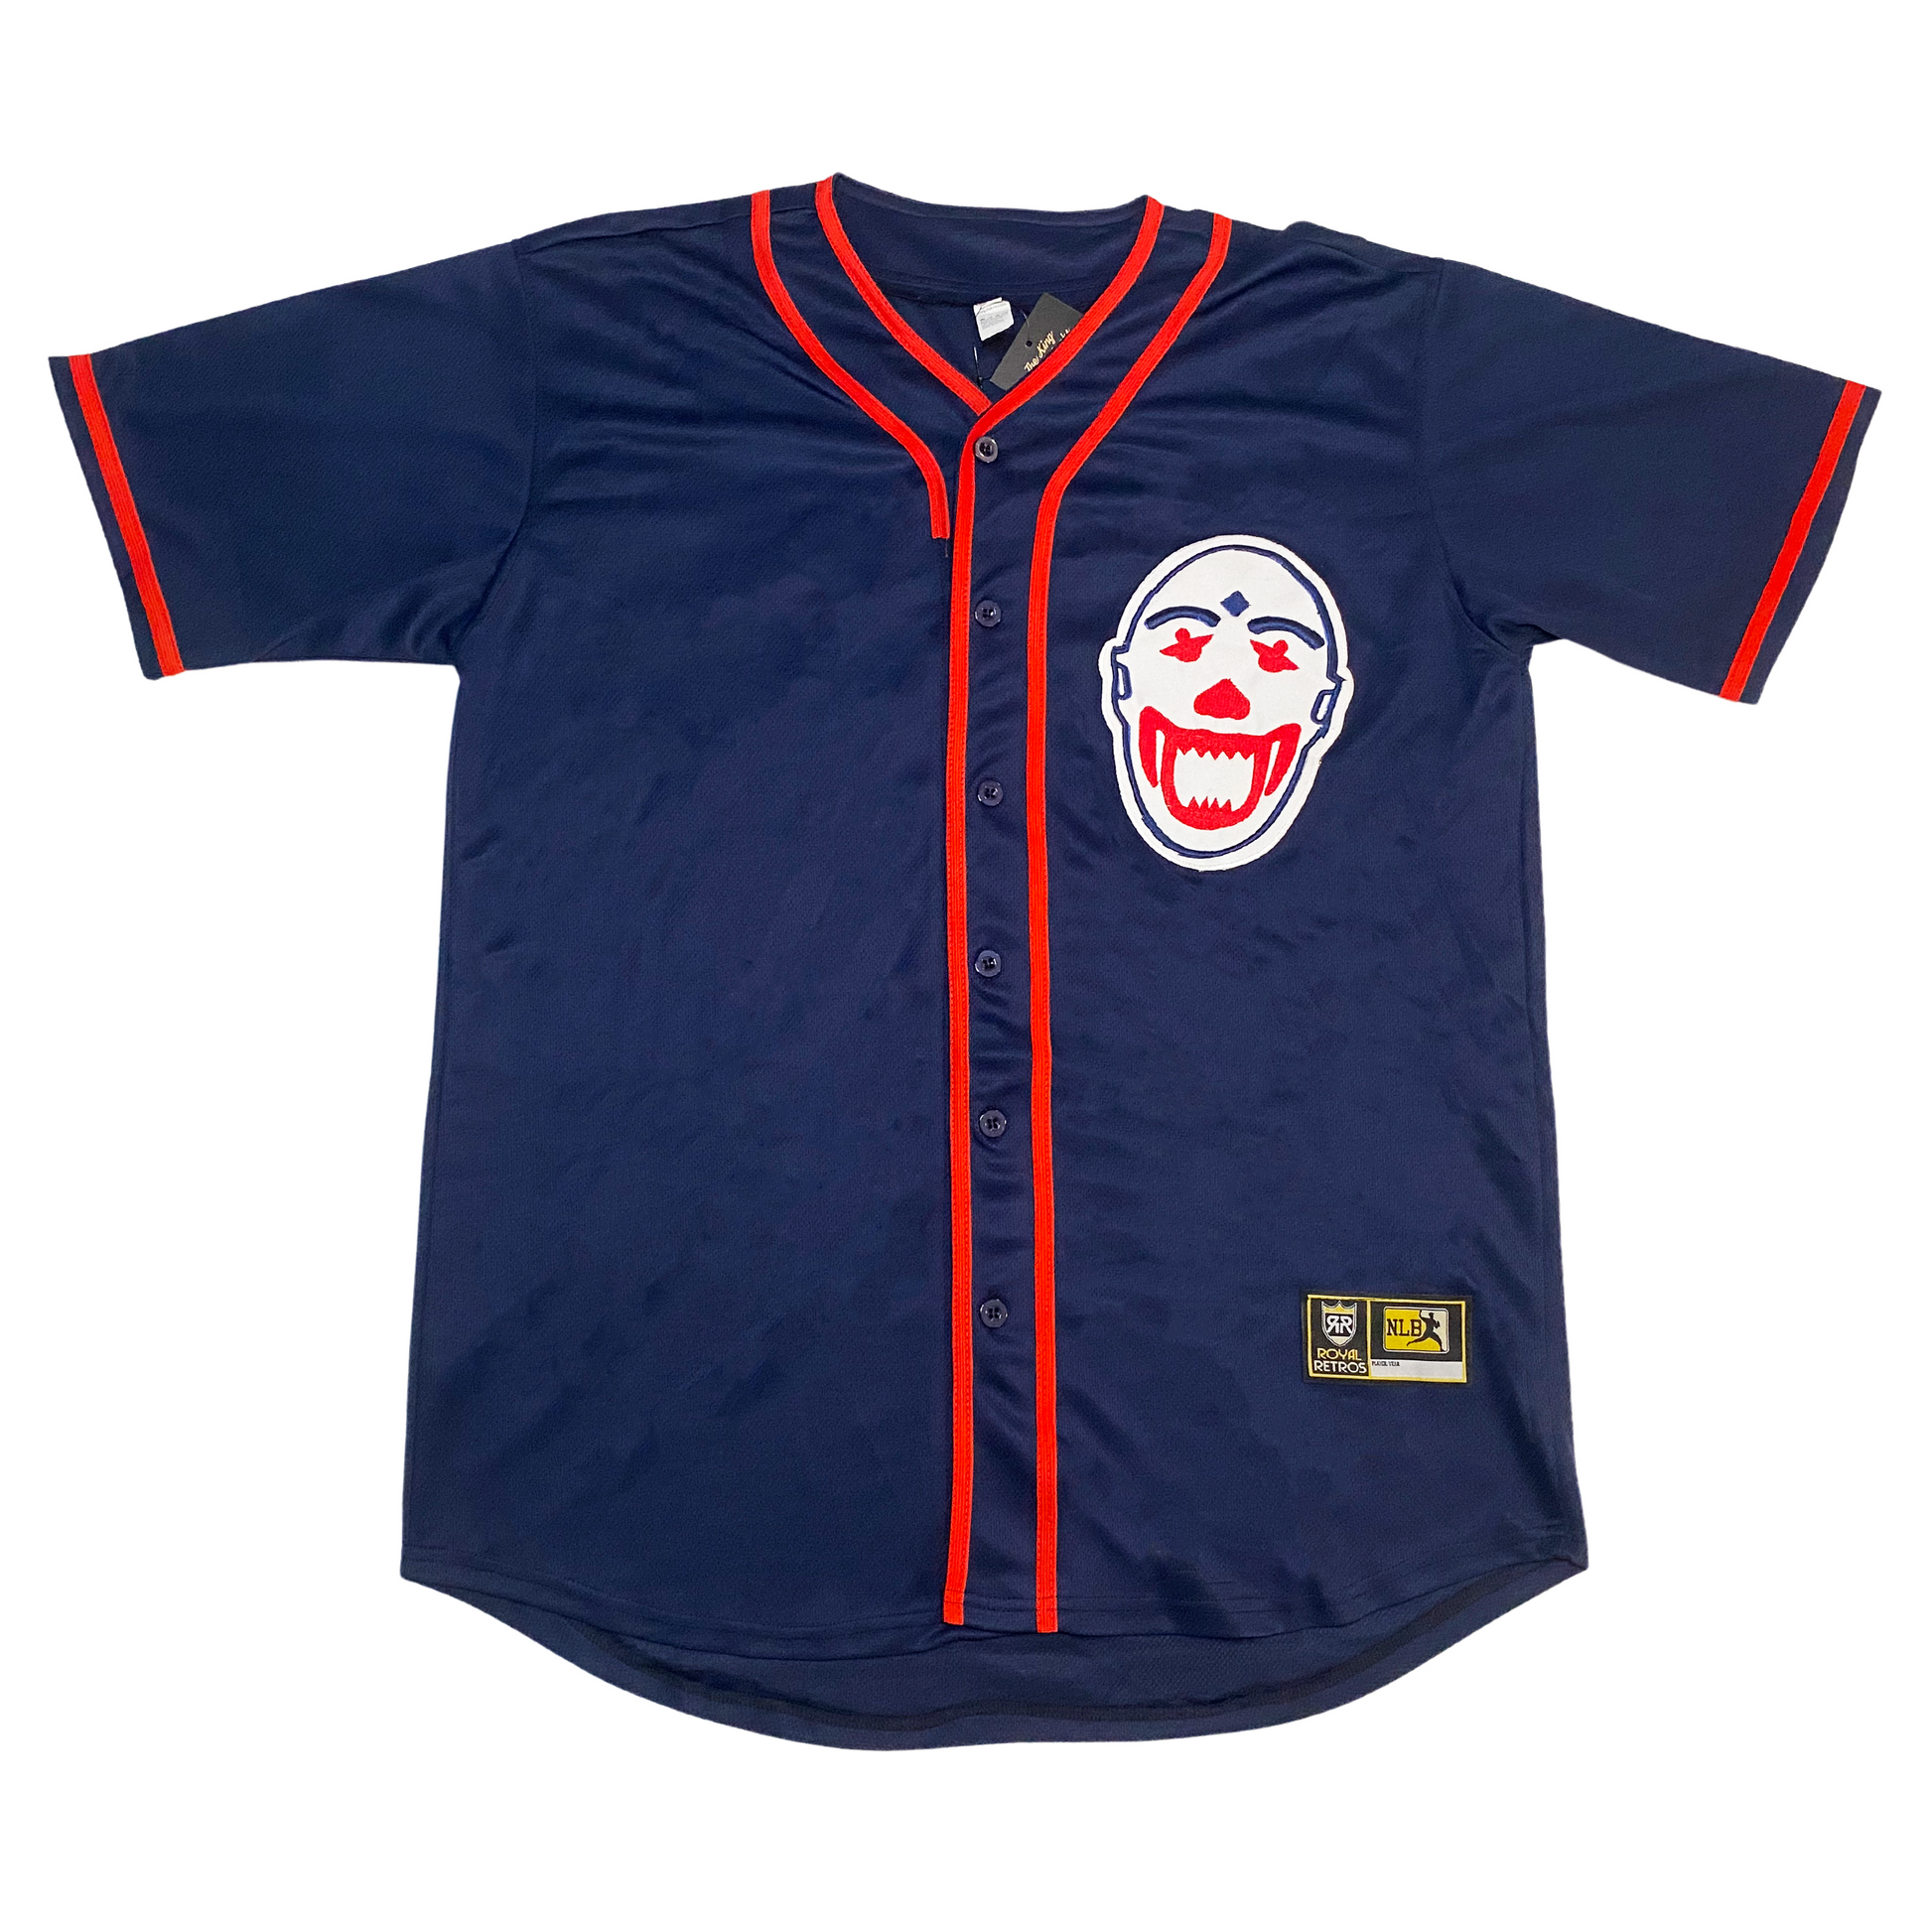 Men’s Teambrown Hank Aaron Indianapolis Clowns Royal Name & Number T-Shirt